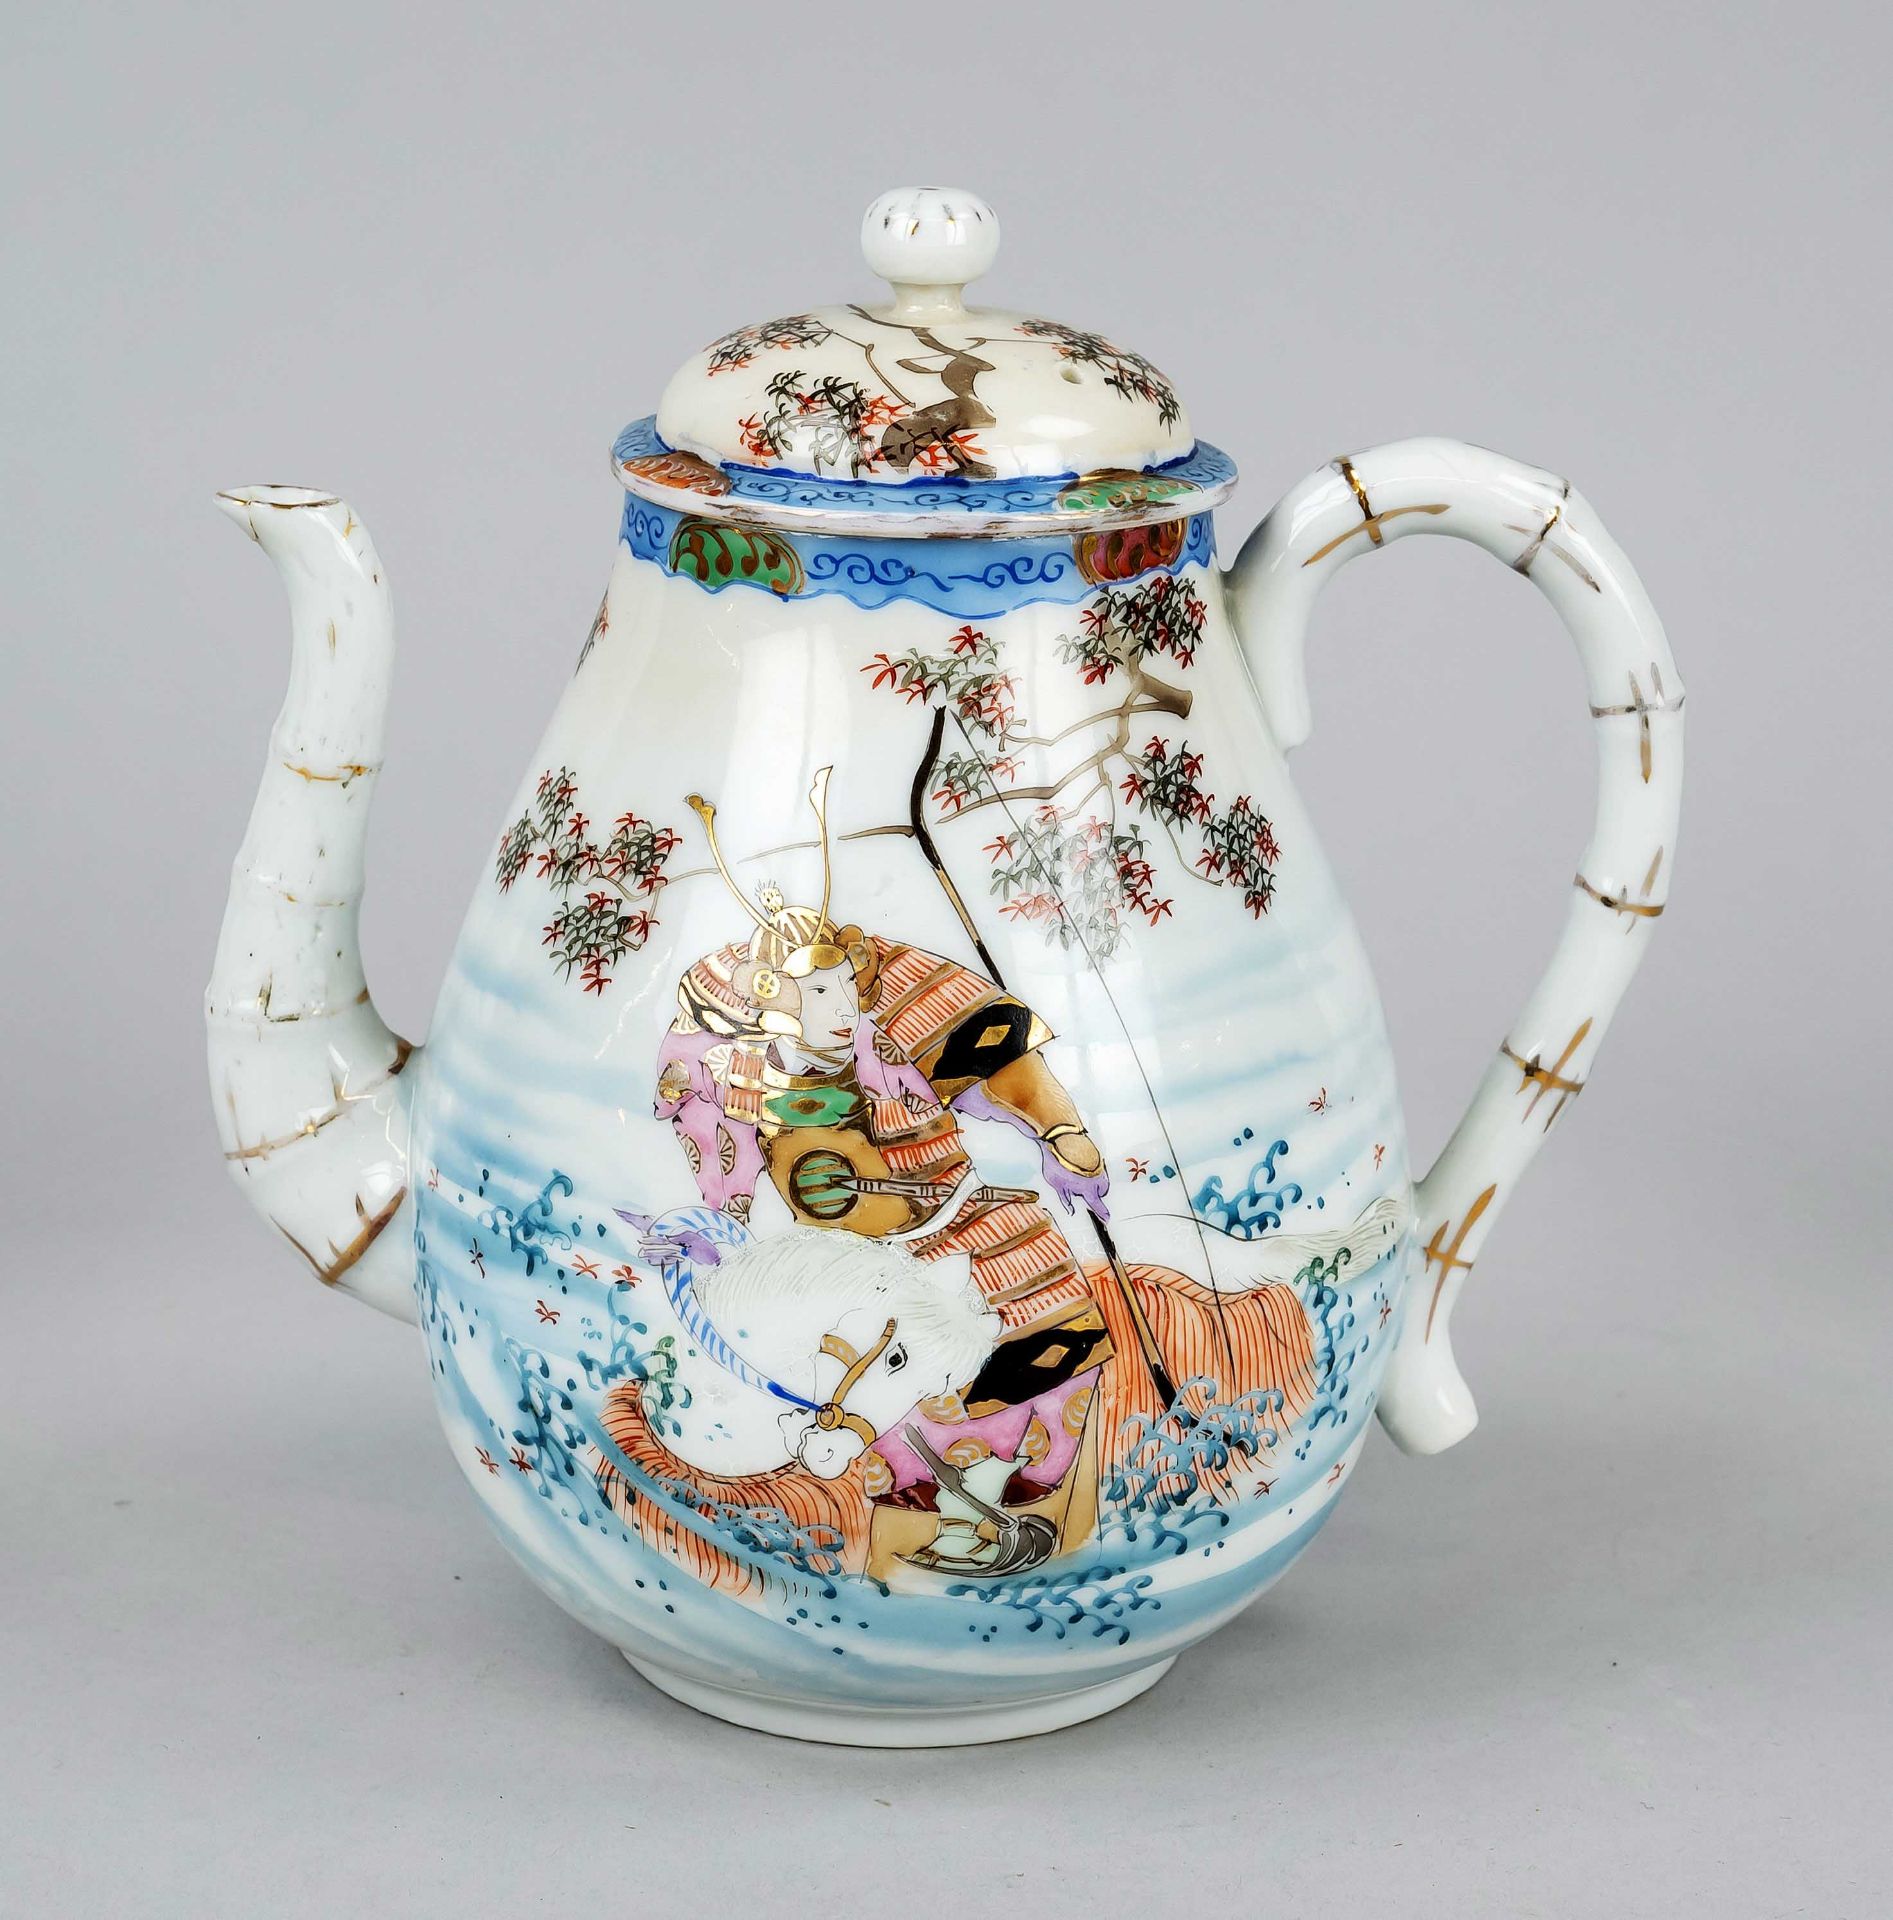 Kutani teapot, Japan, c. 1900, porcelain teapot with bamboo spout and bamboo handle, polychrome